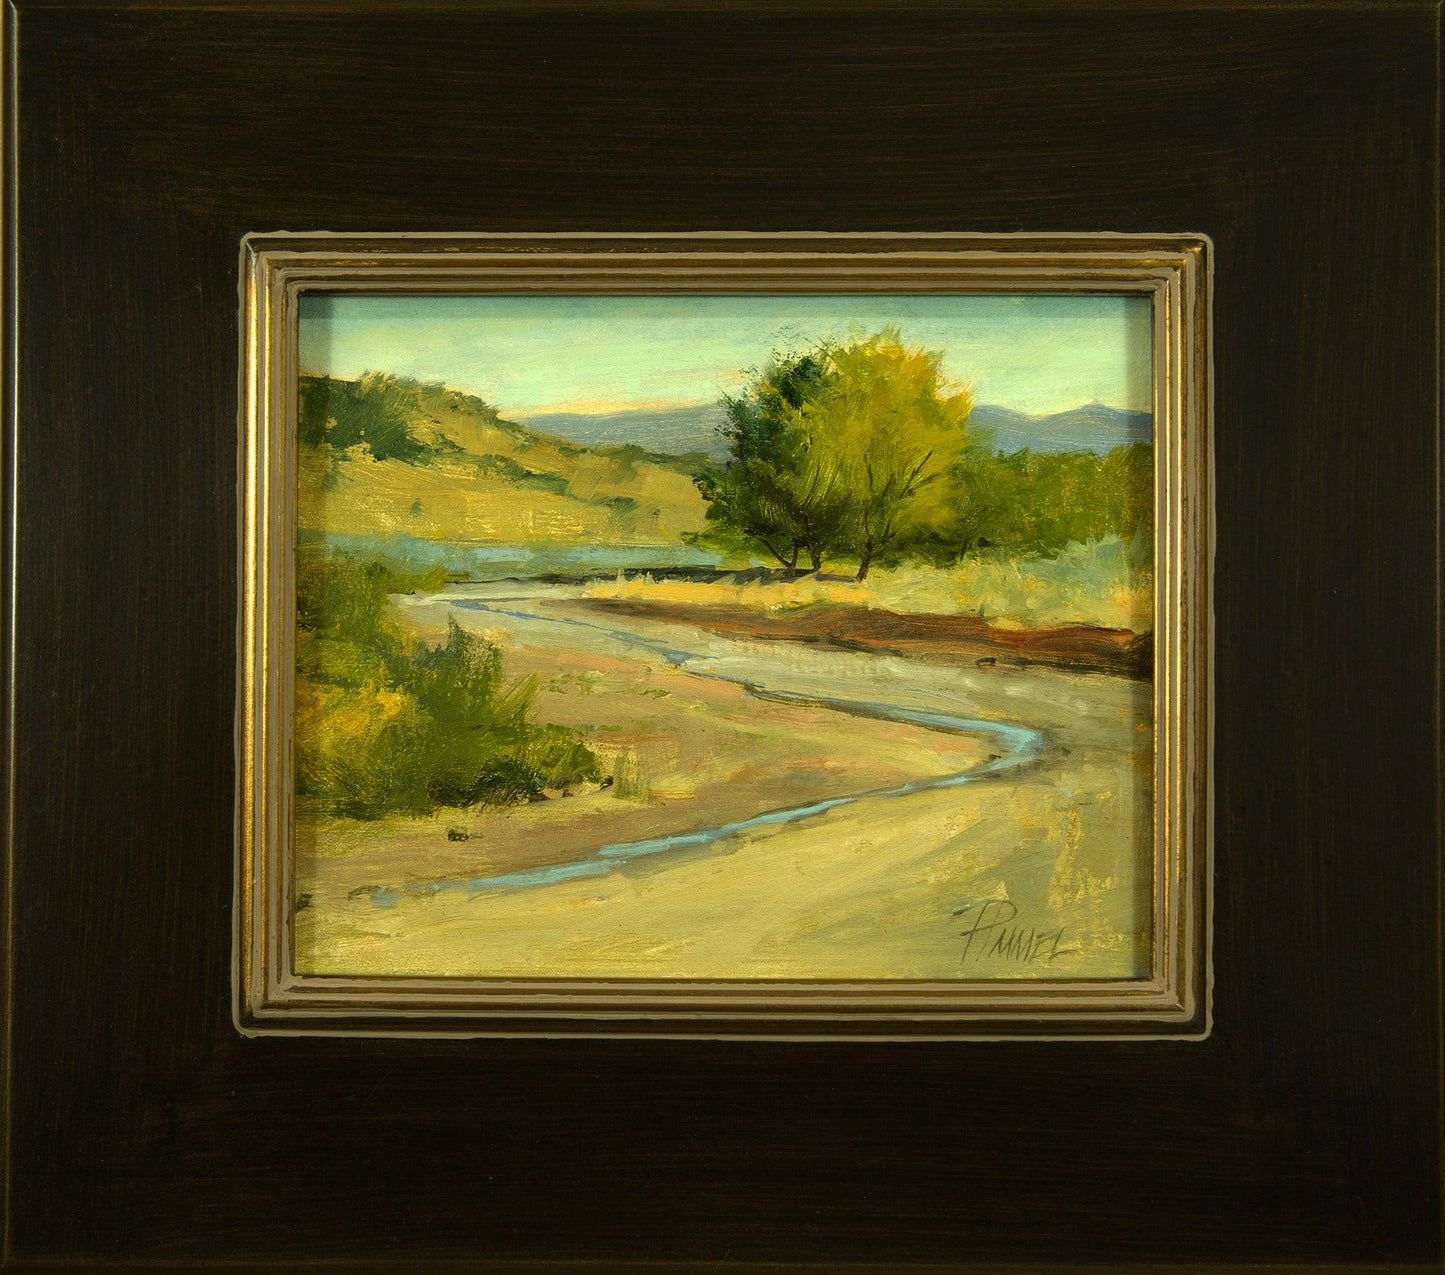 Desert Wash-Painting-Peggy Immel-Sorrel Sky Gallery